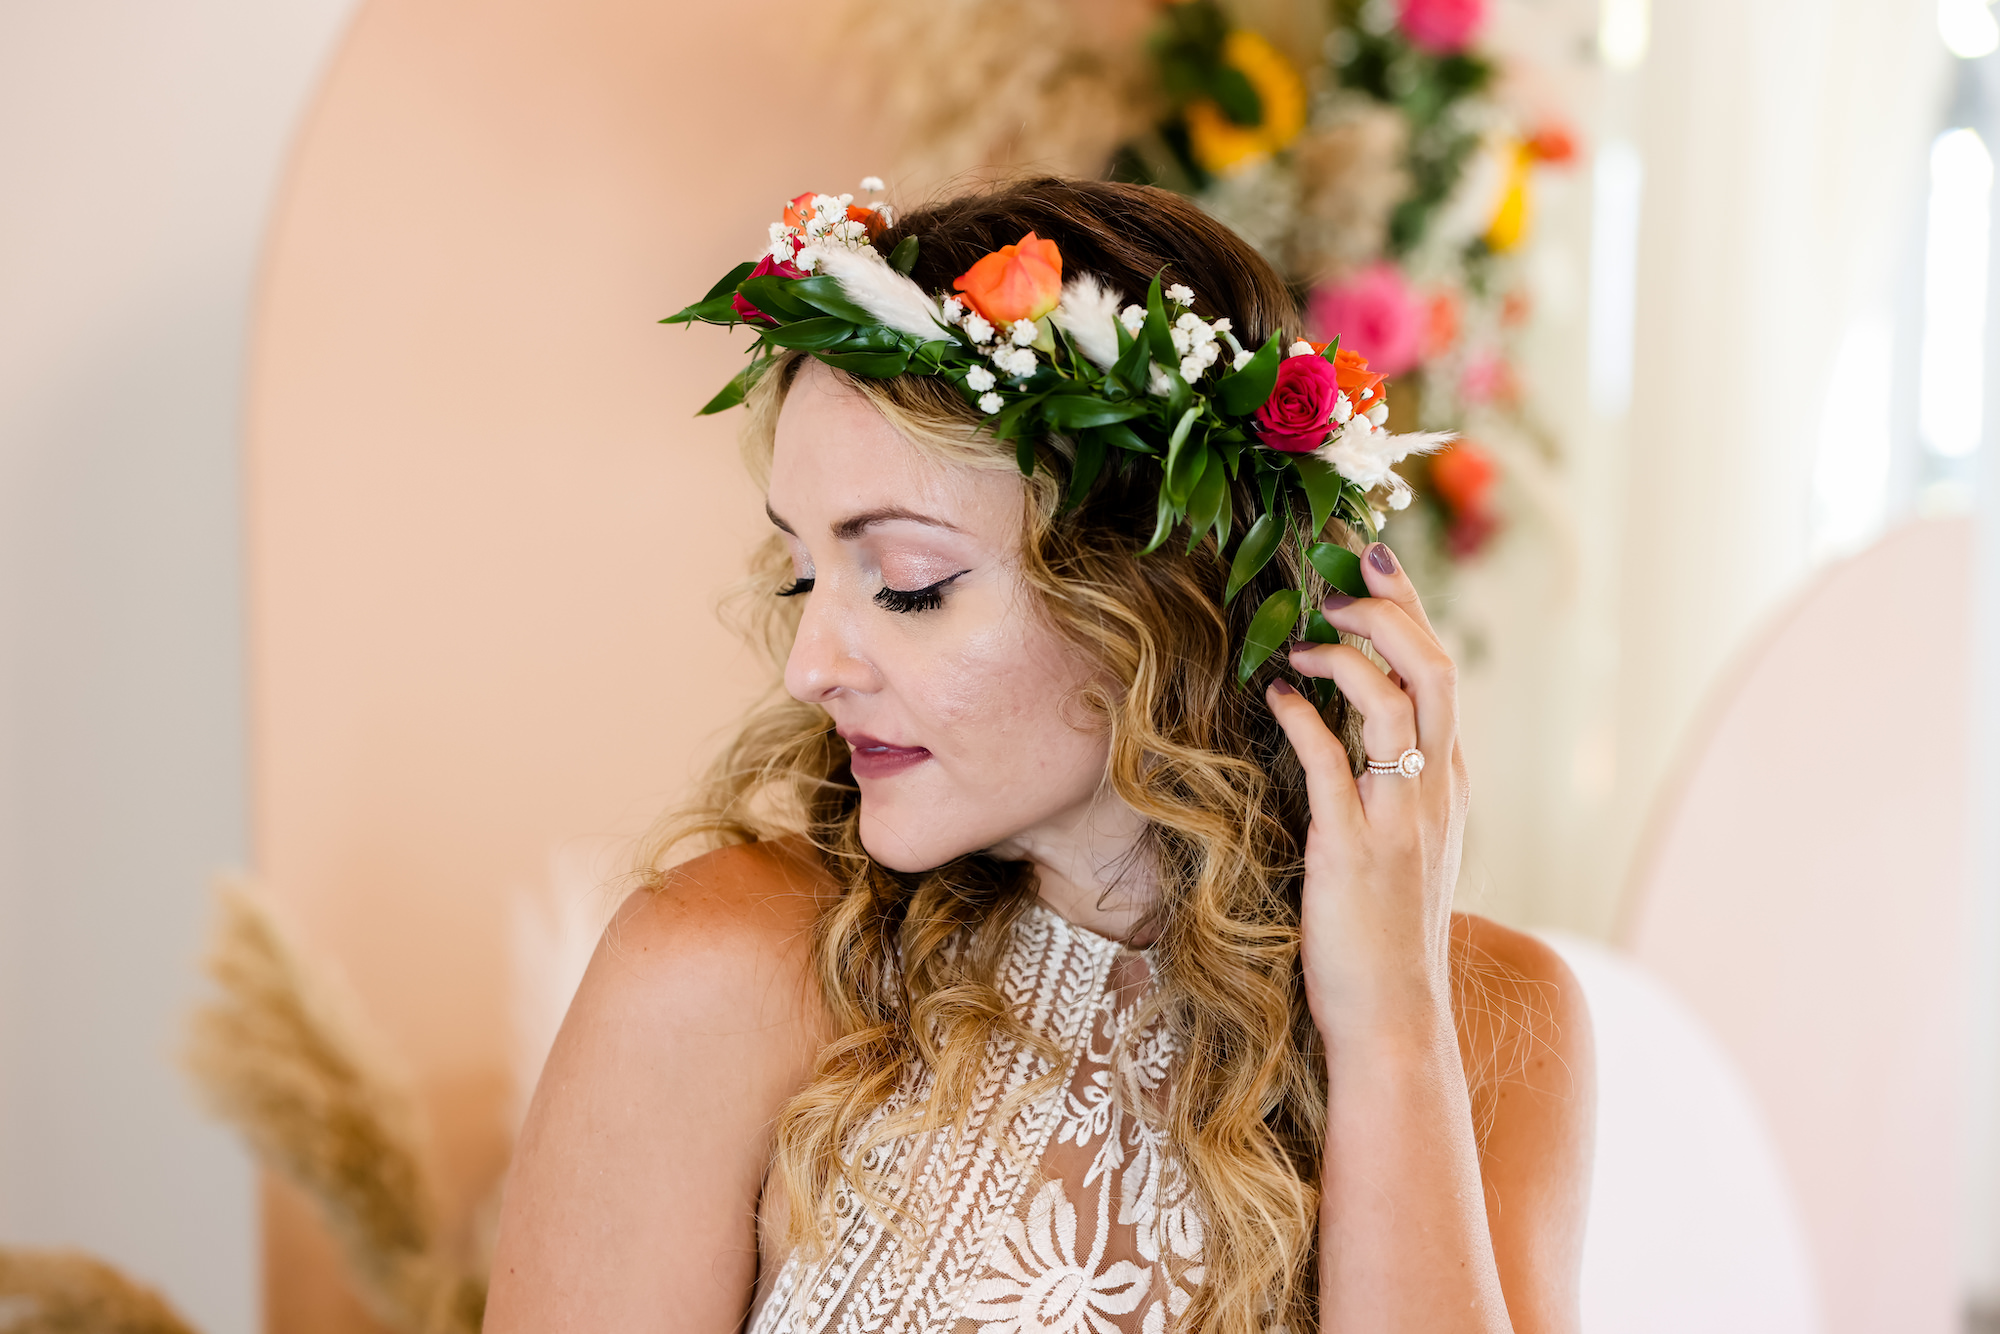 Boho Bridal Flower Crown Ideas | Wedding Hair Inspiration | Tampa Bay Hair and Makeup Artist Michele Renee the Studio